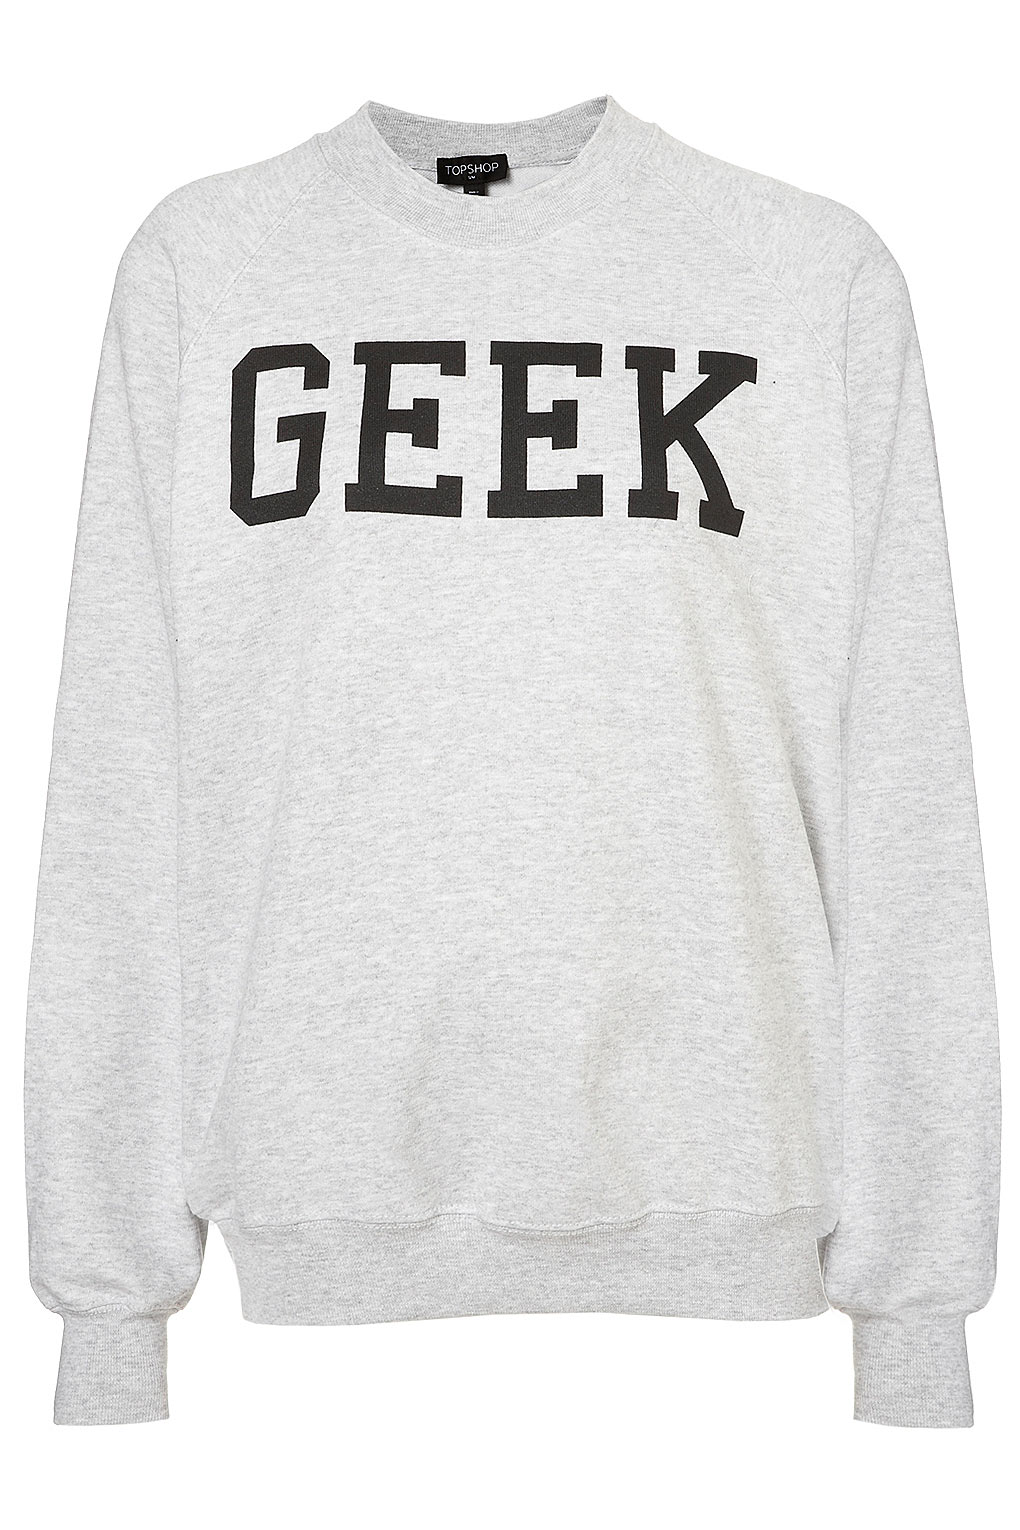 Topshop Geek Sweat in Gray | Lyst